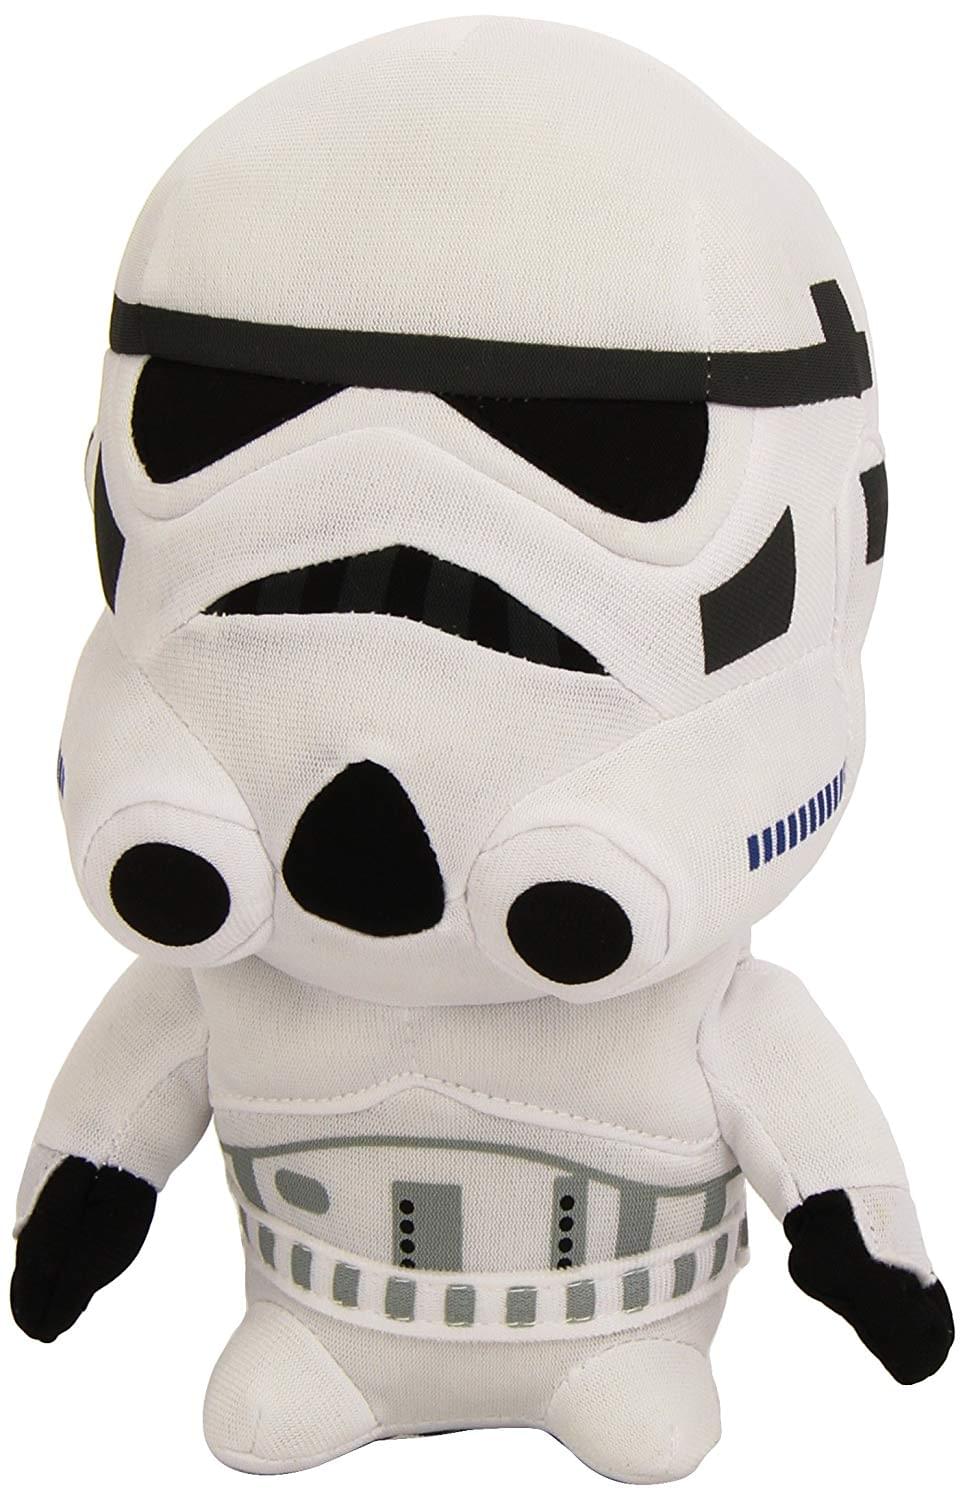 Star Wars Stormtrooper Super Deformed Plush